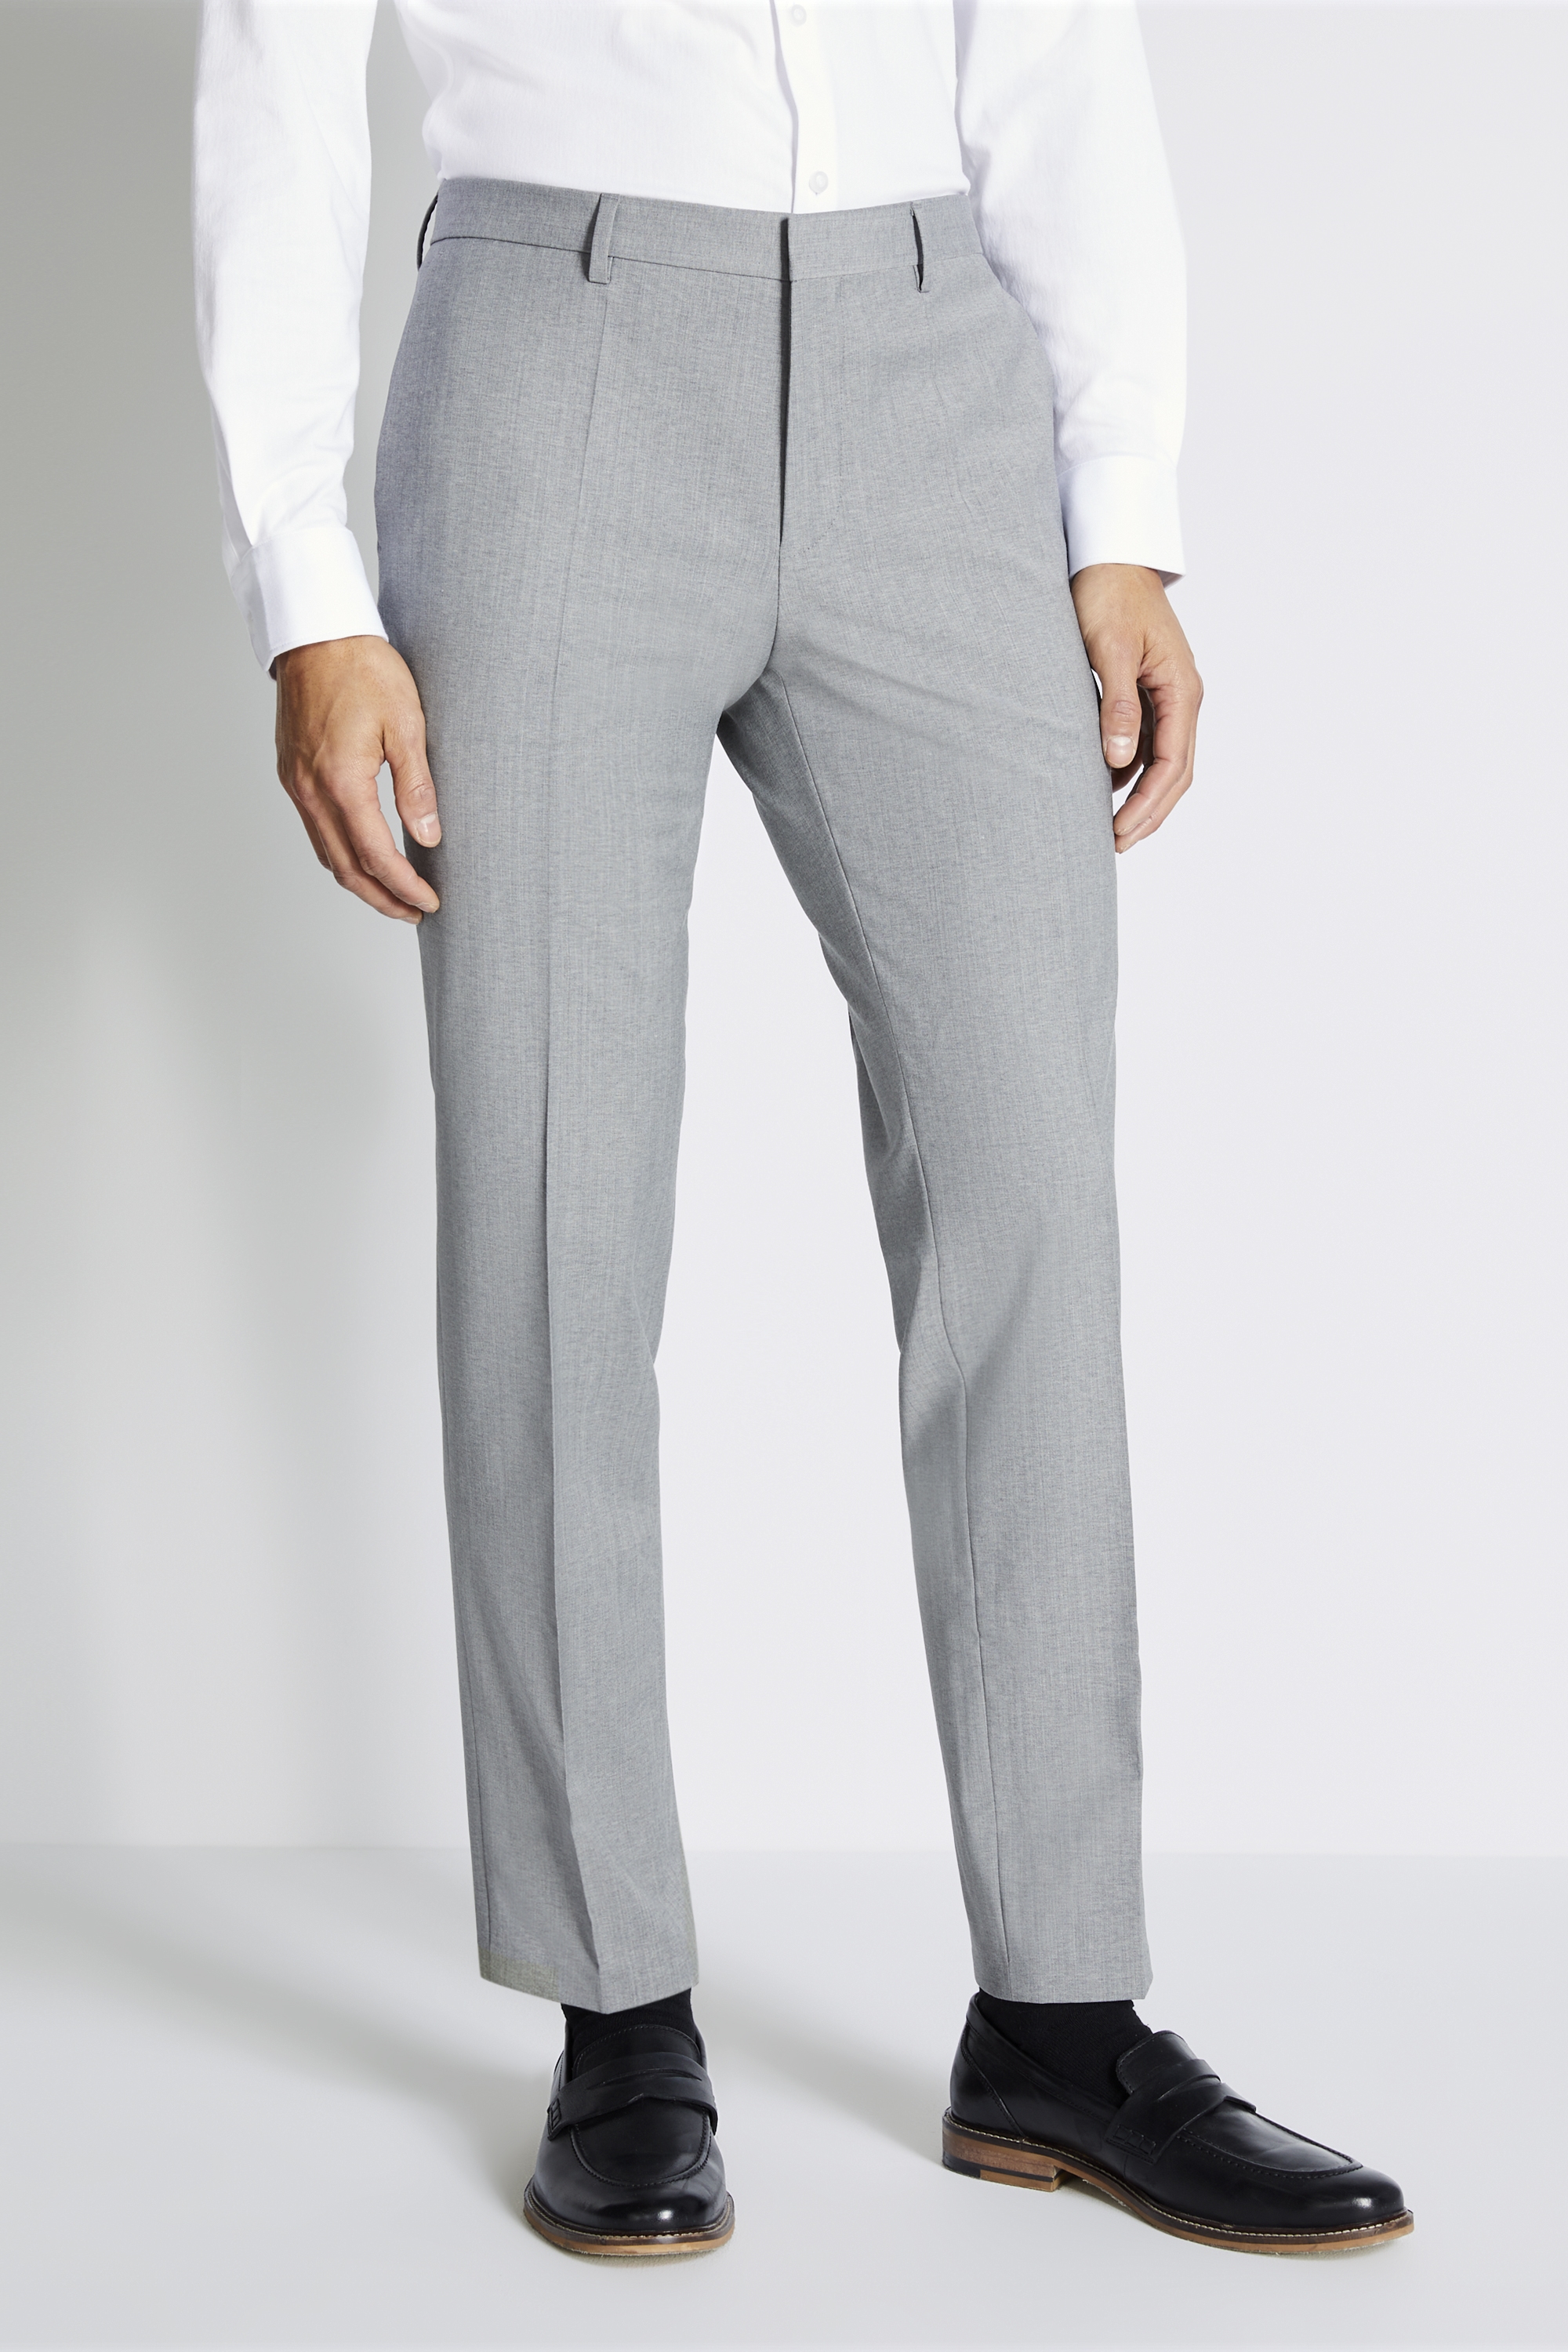 Slim Fit Light Grey Trouser | Buy Online at Moss